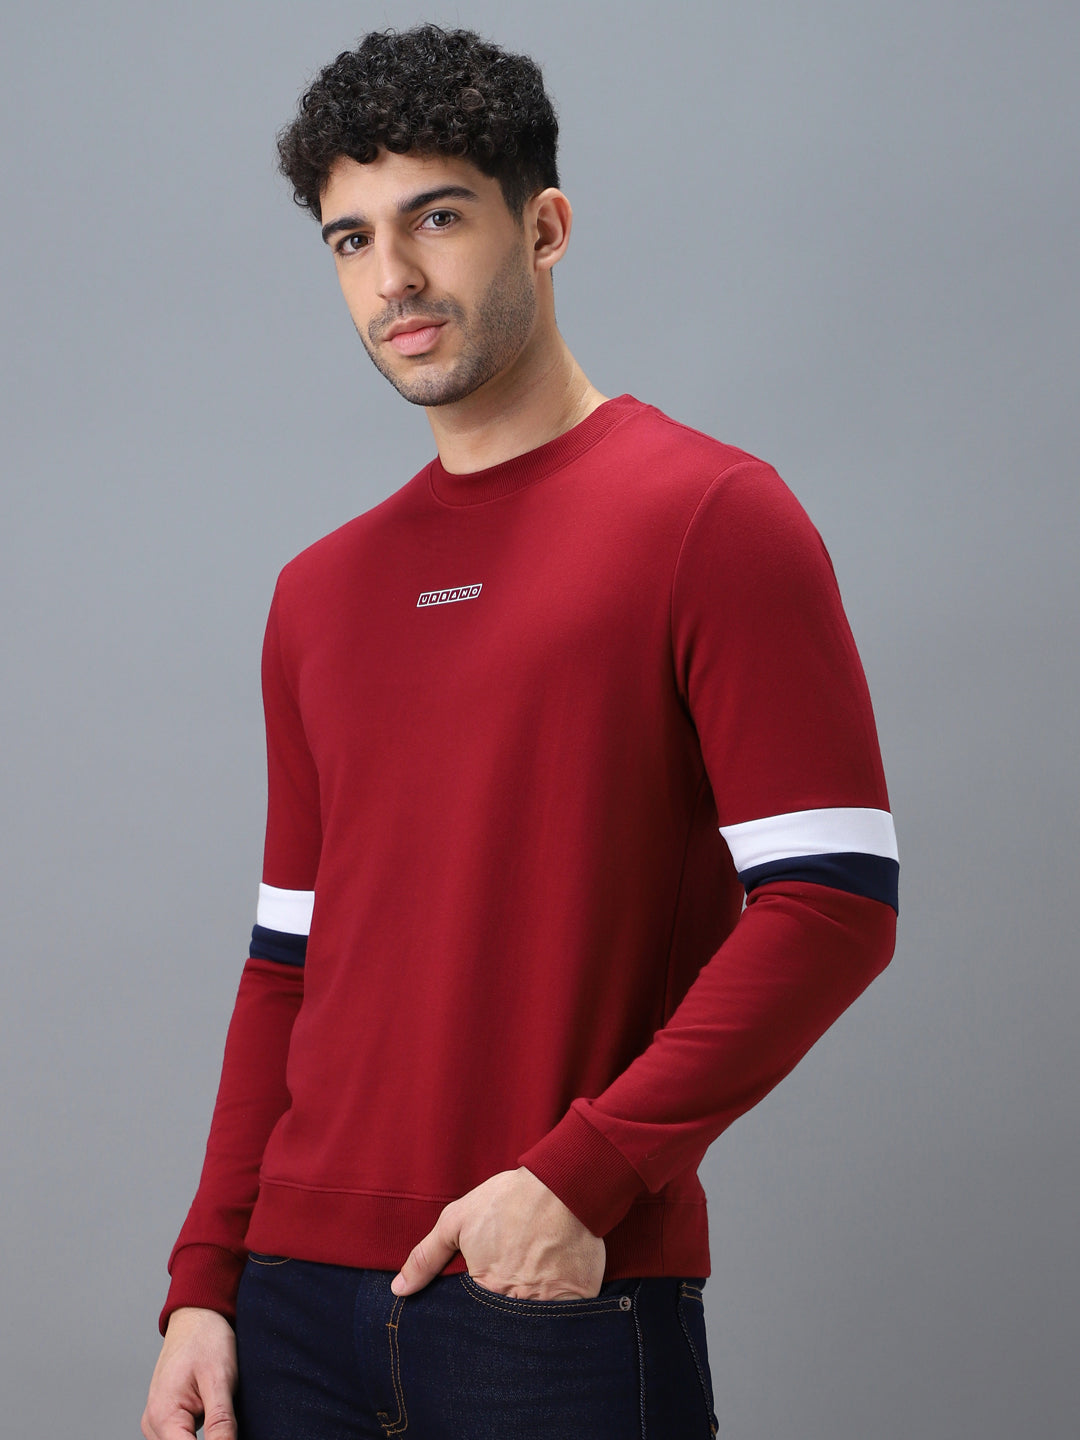 Men's Red Cotton Color Block Round Neck Sweatshirt